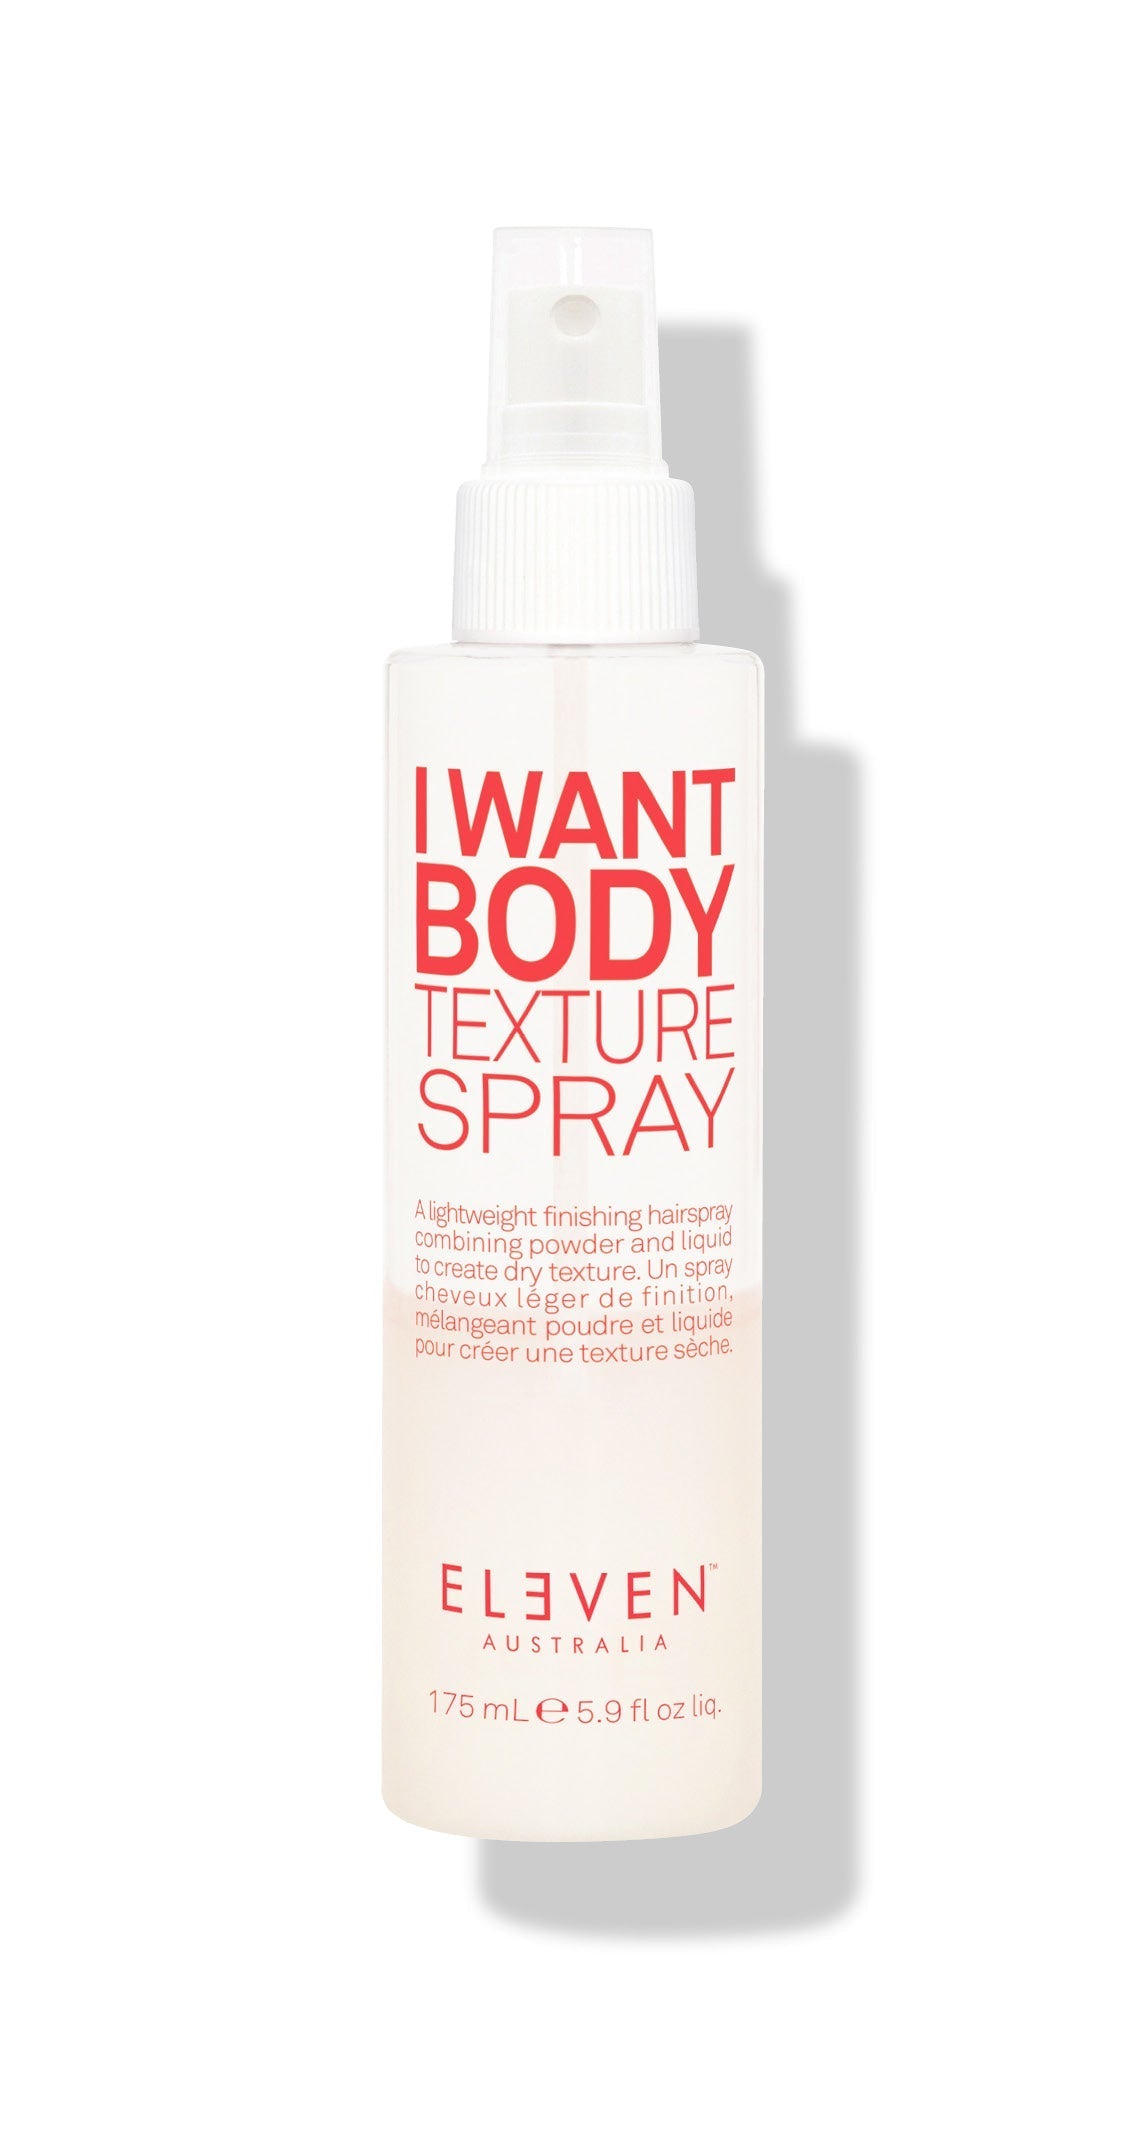 I Want Body Texture Spray - 175ml - ELEVEN Australia